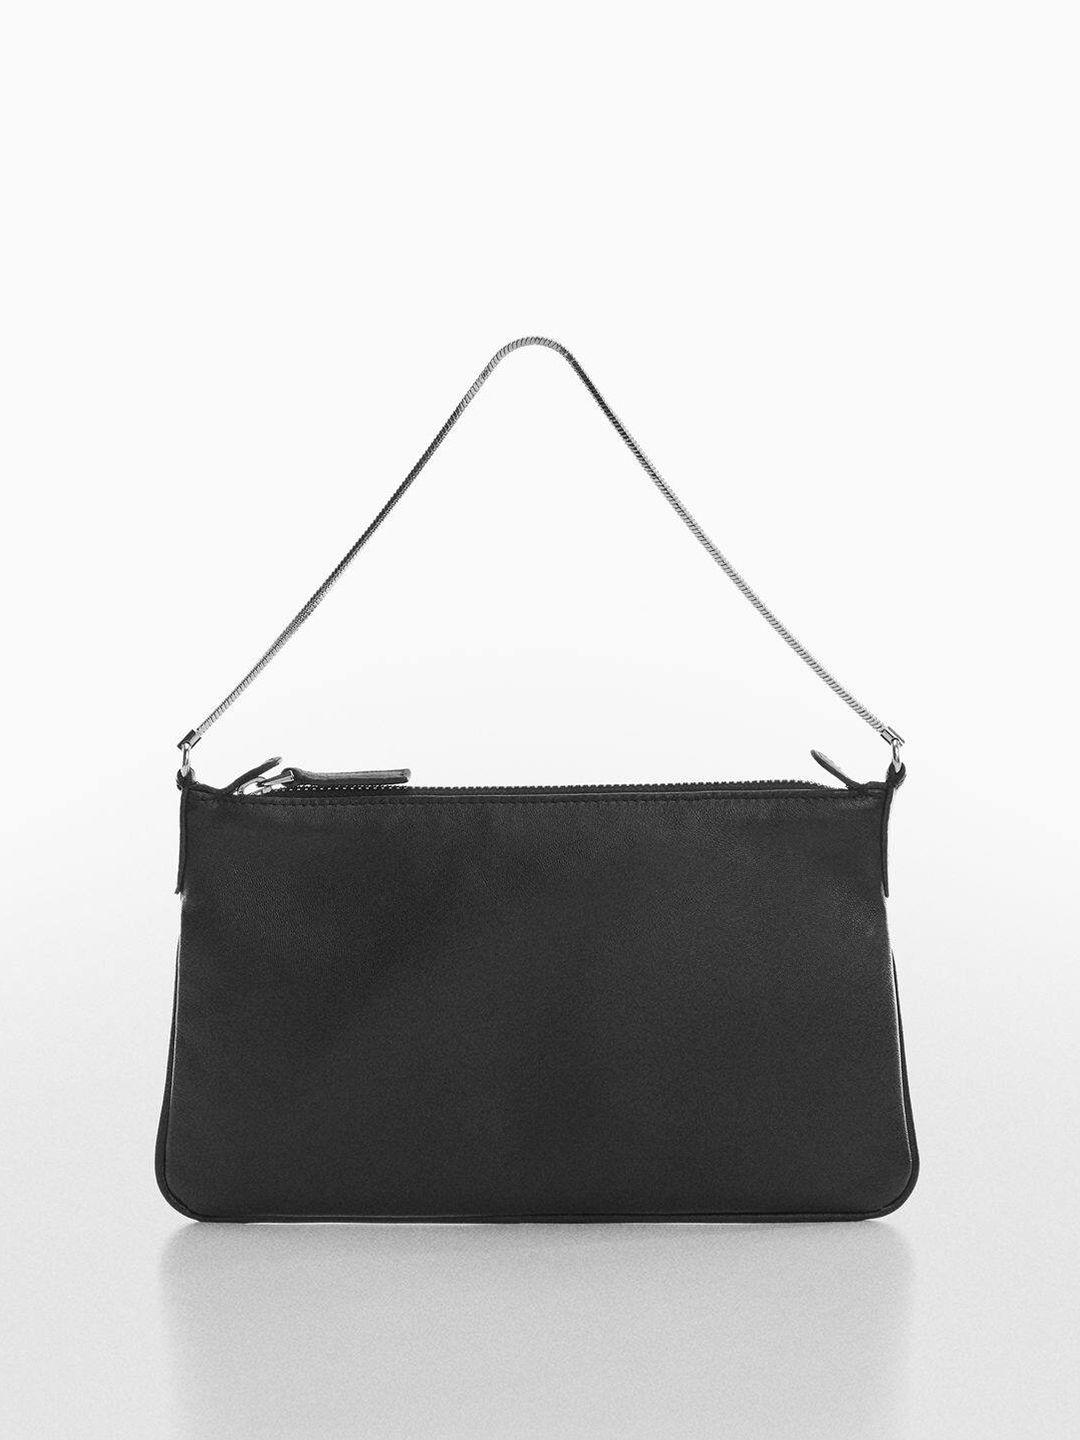 mango leather purse